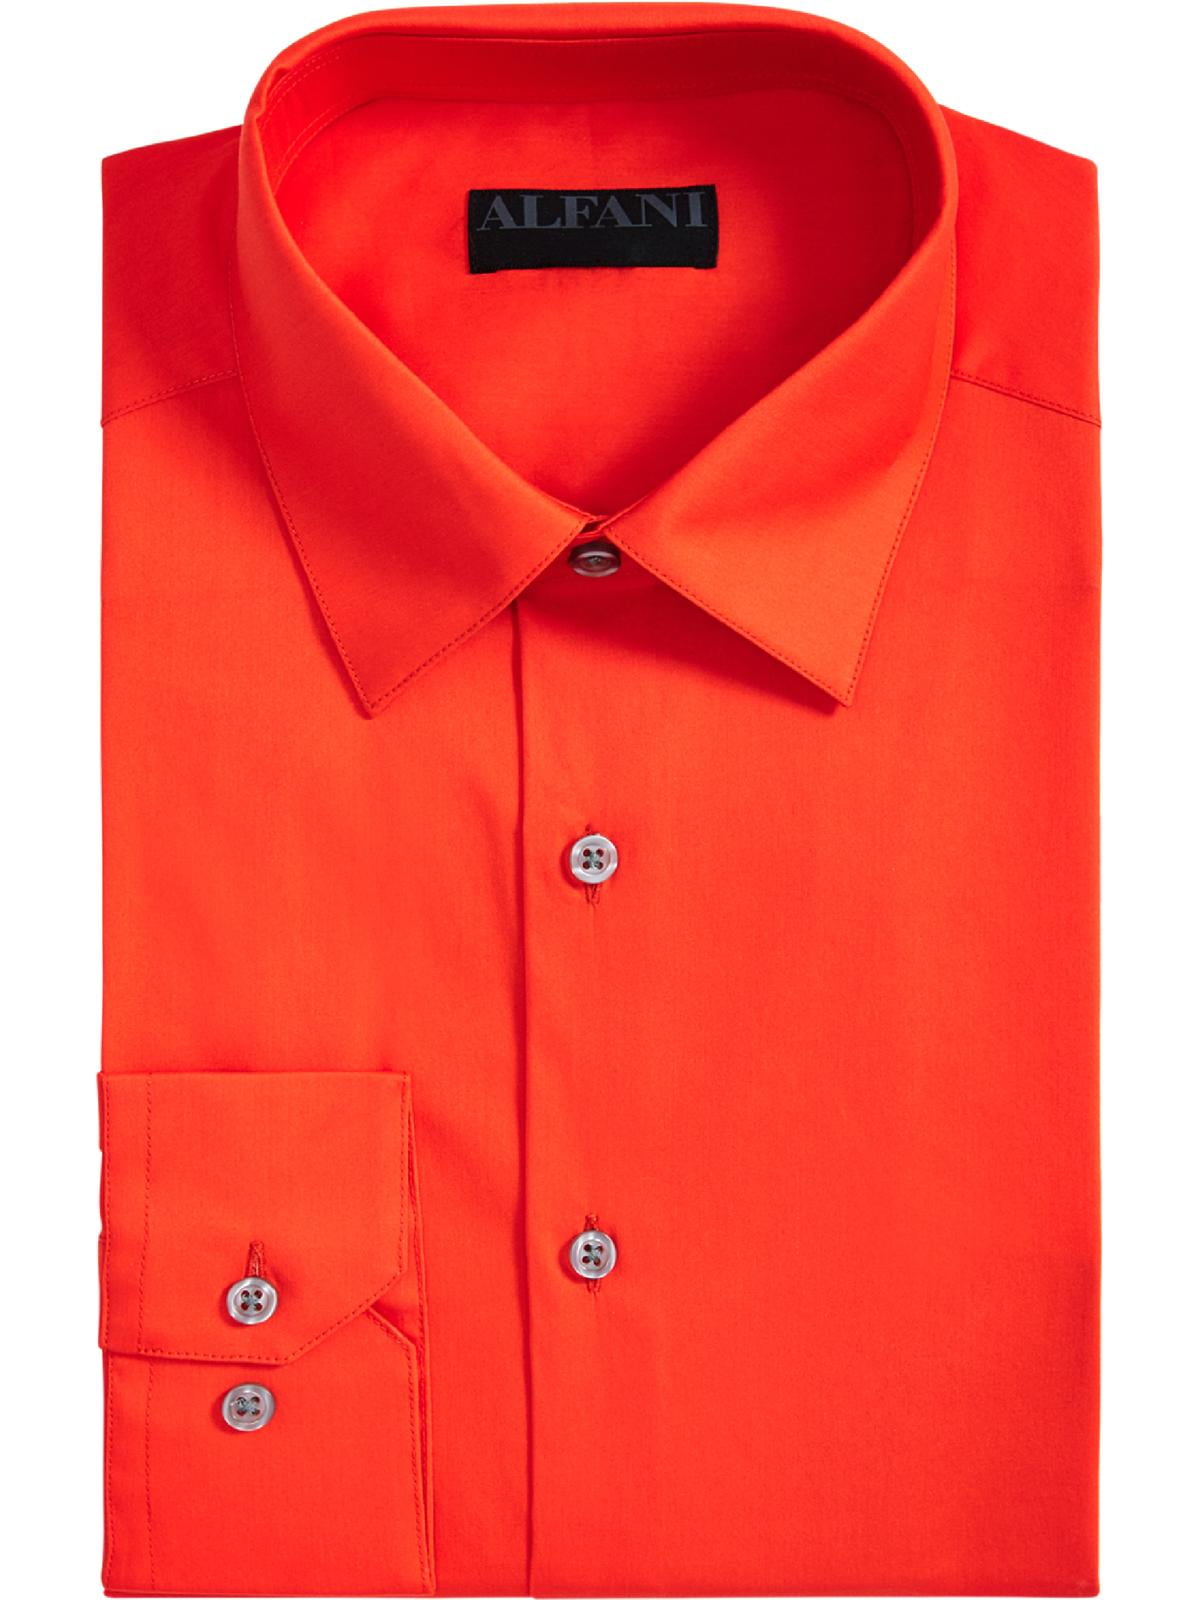 Alfani Mens Slim Fit Officewear Button-Down Shirt Orange M - Walmart.com